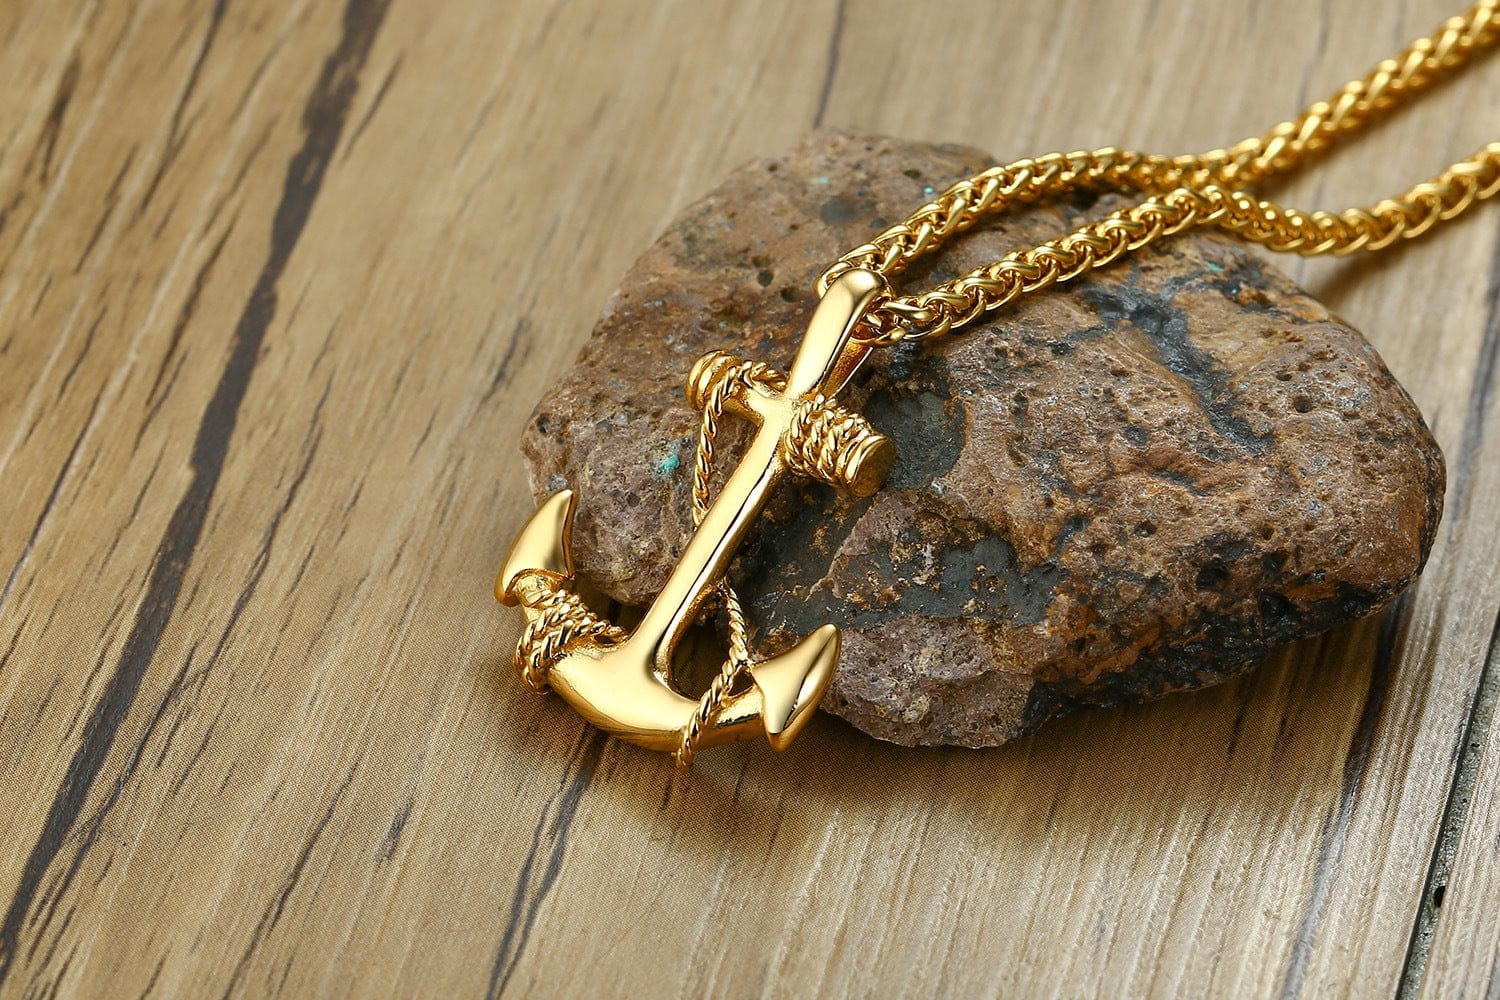 VVS Jewelry hip hop jewelry Anchor Pendant Necklace